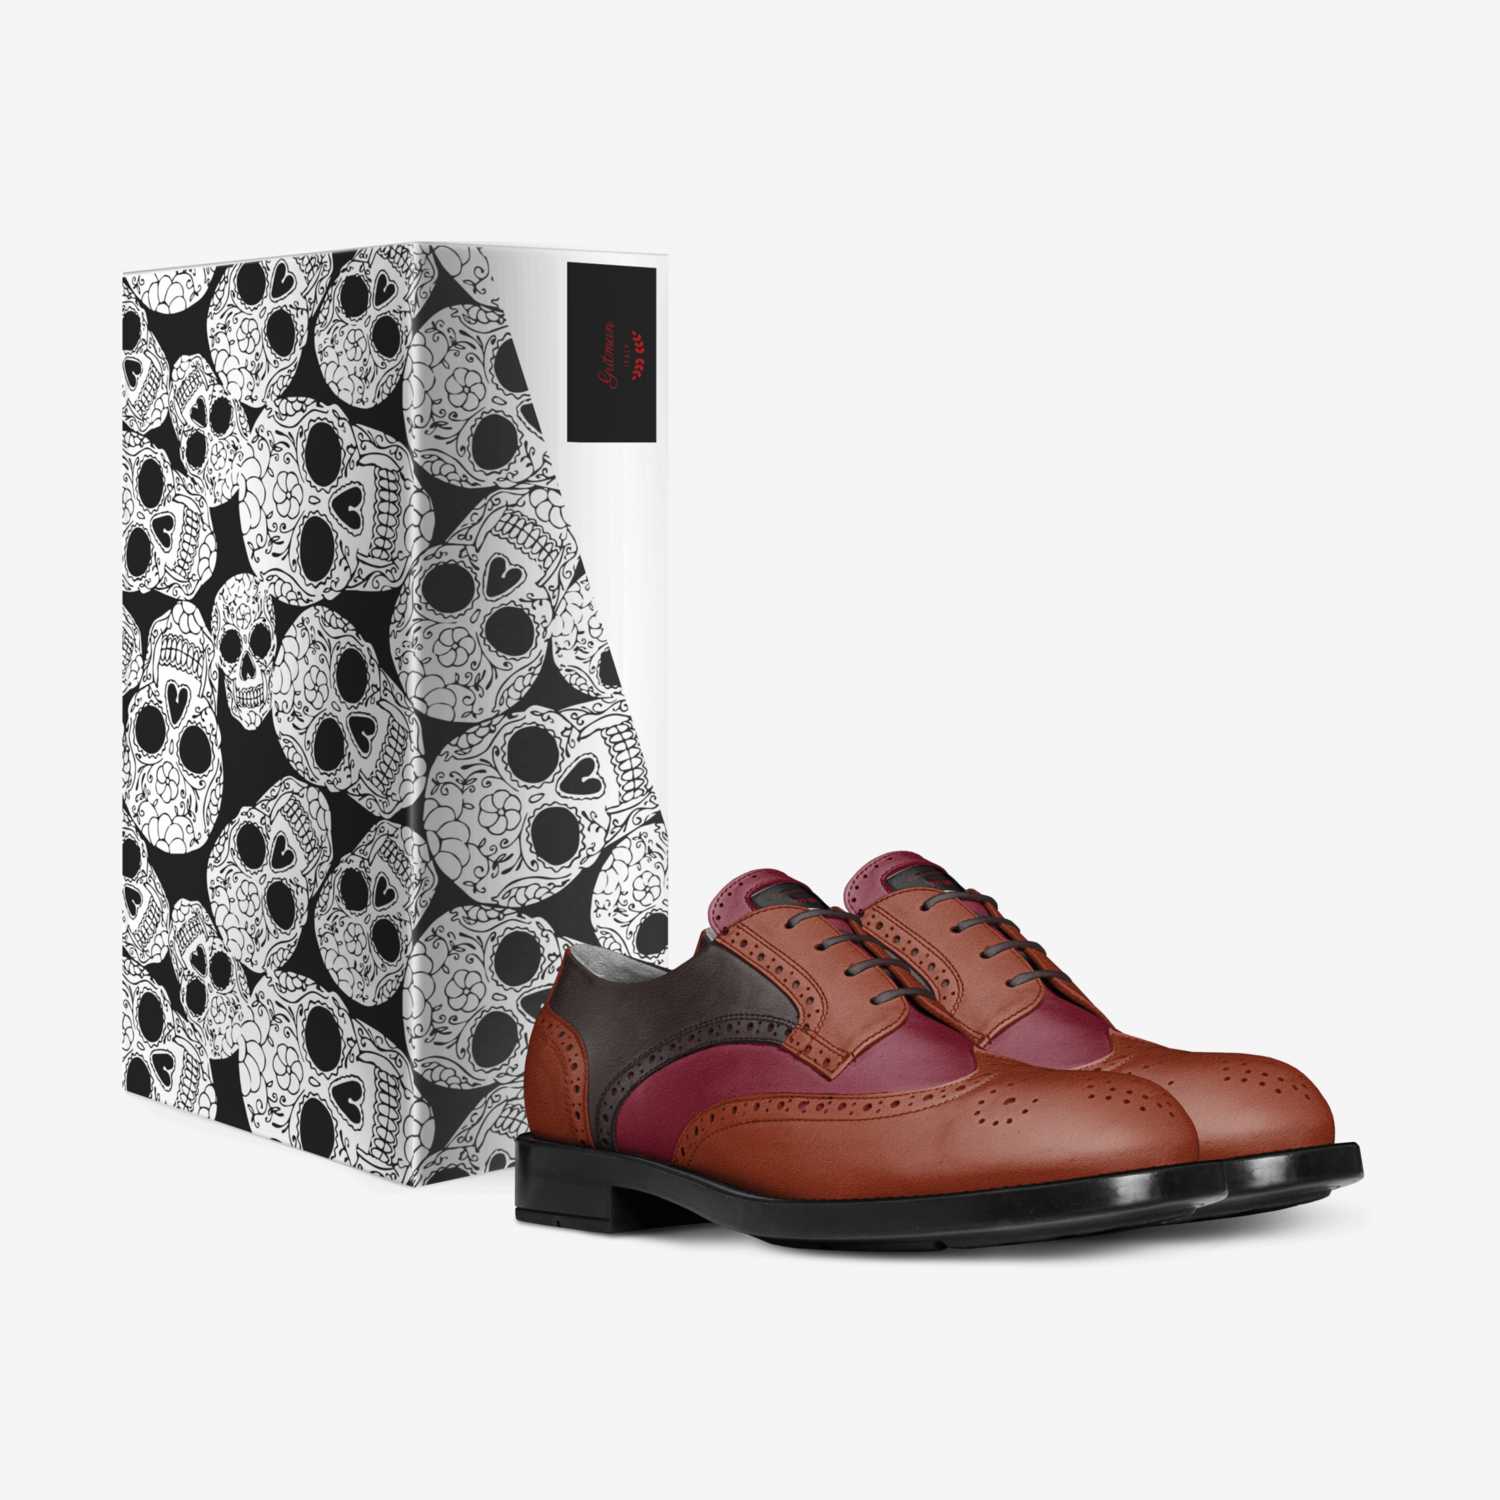 Gritman custom made in Italy shoes by Nicholas Kremidas | Box view